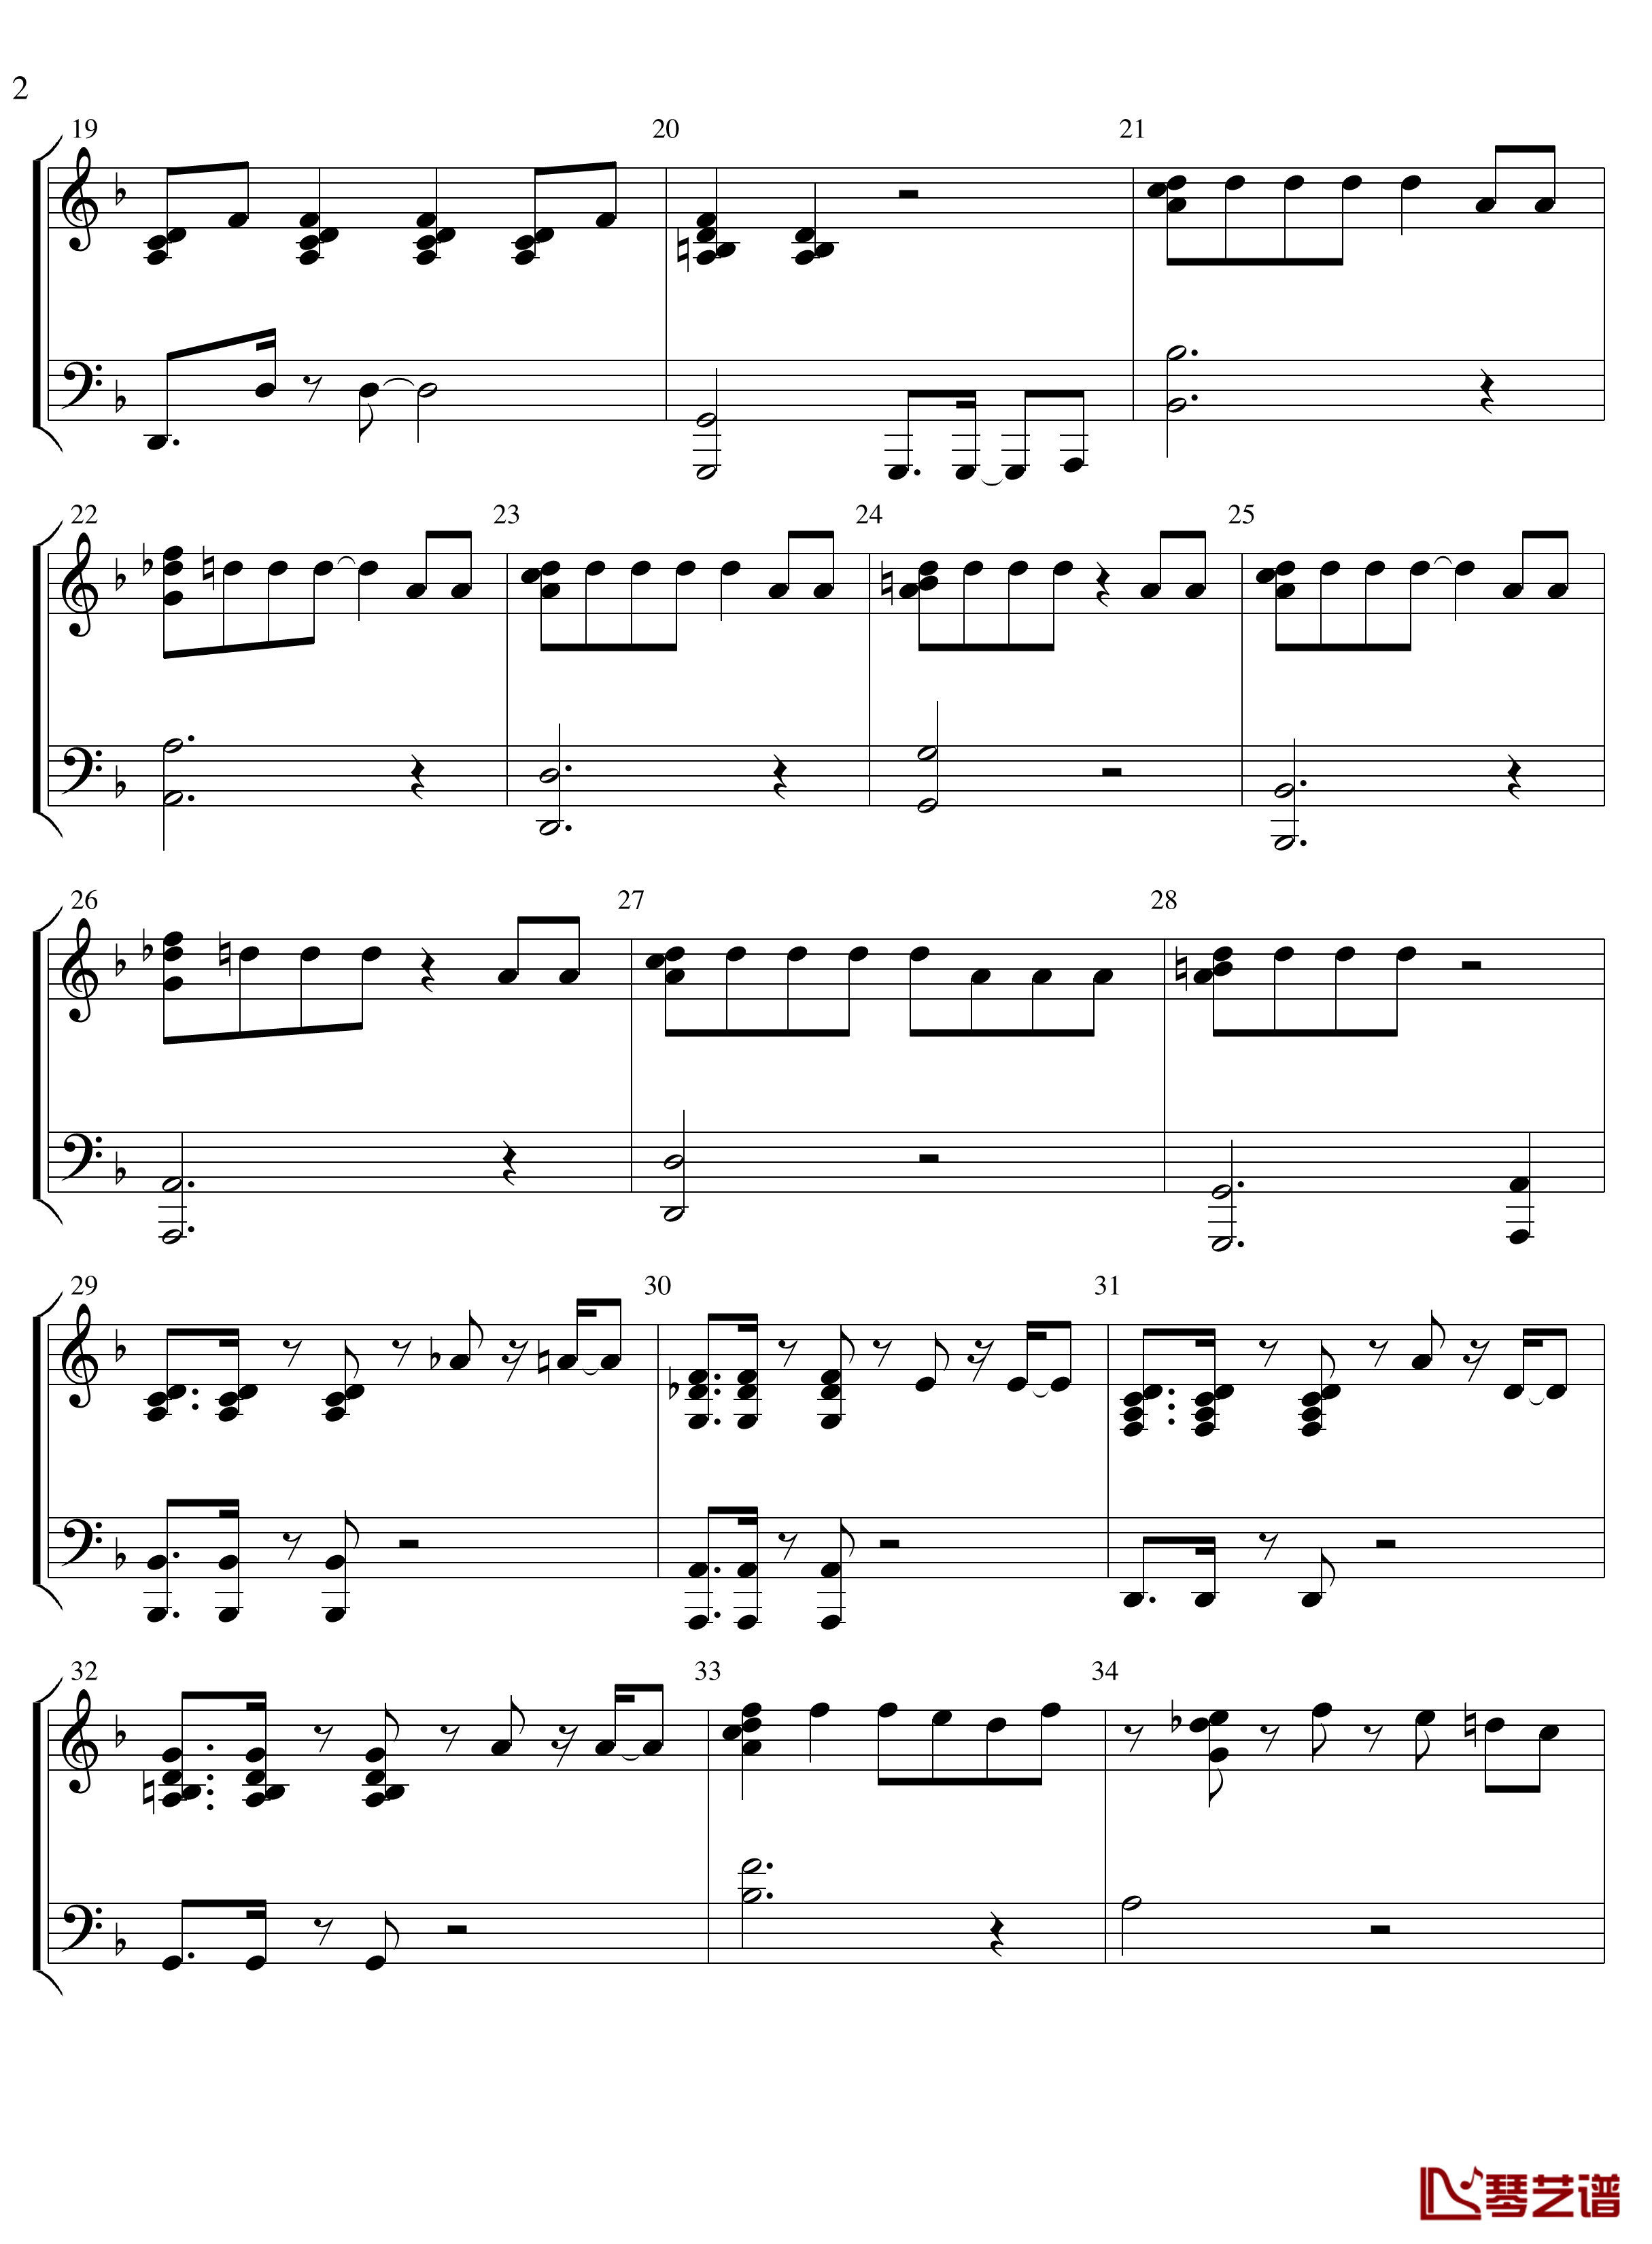 Hands Up钢琴谱-Key of F-2PM2